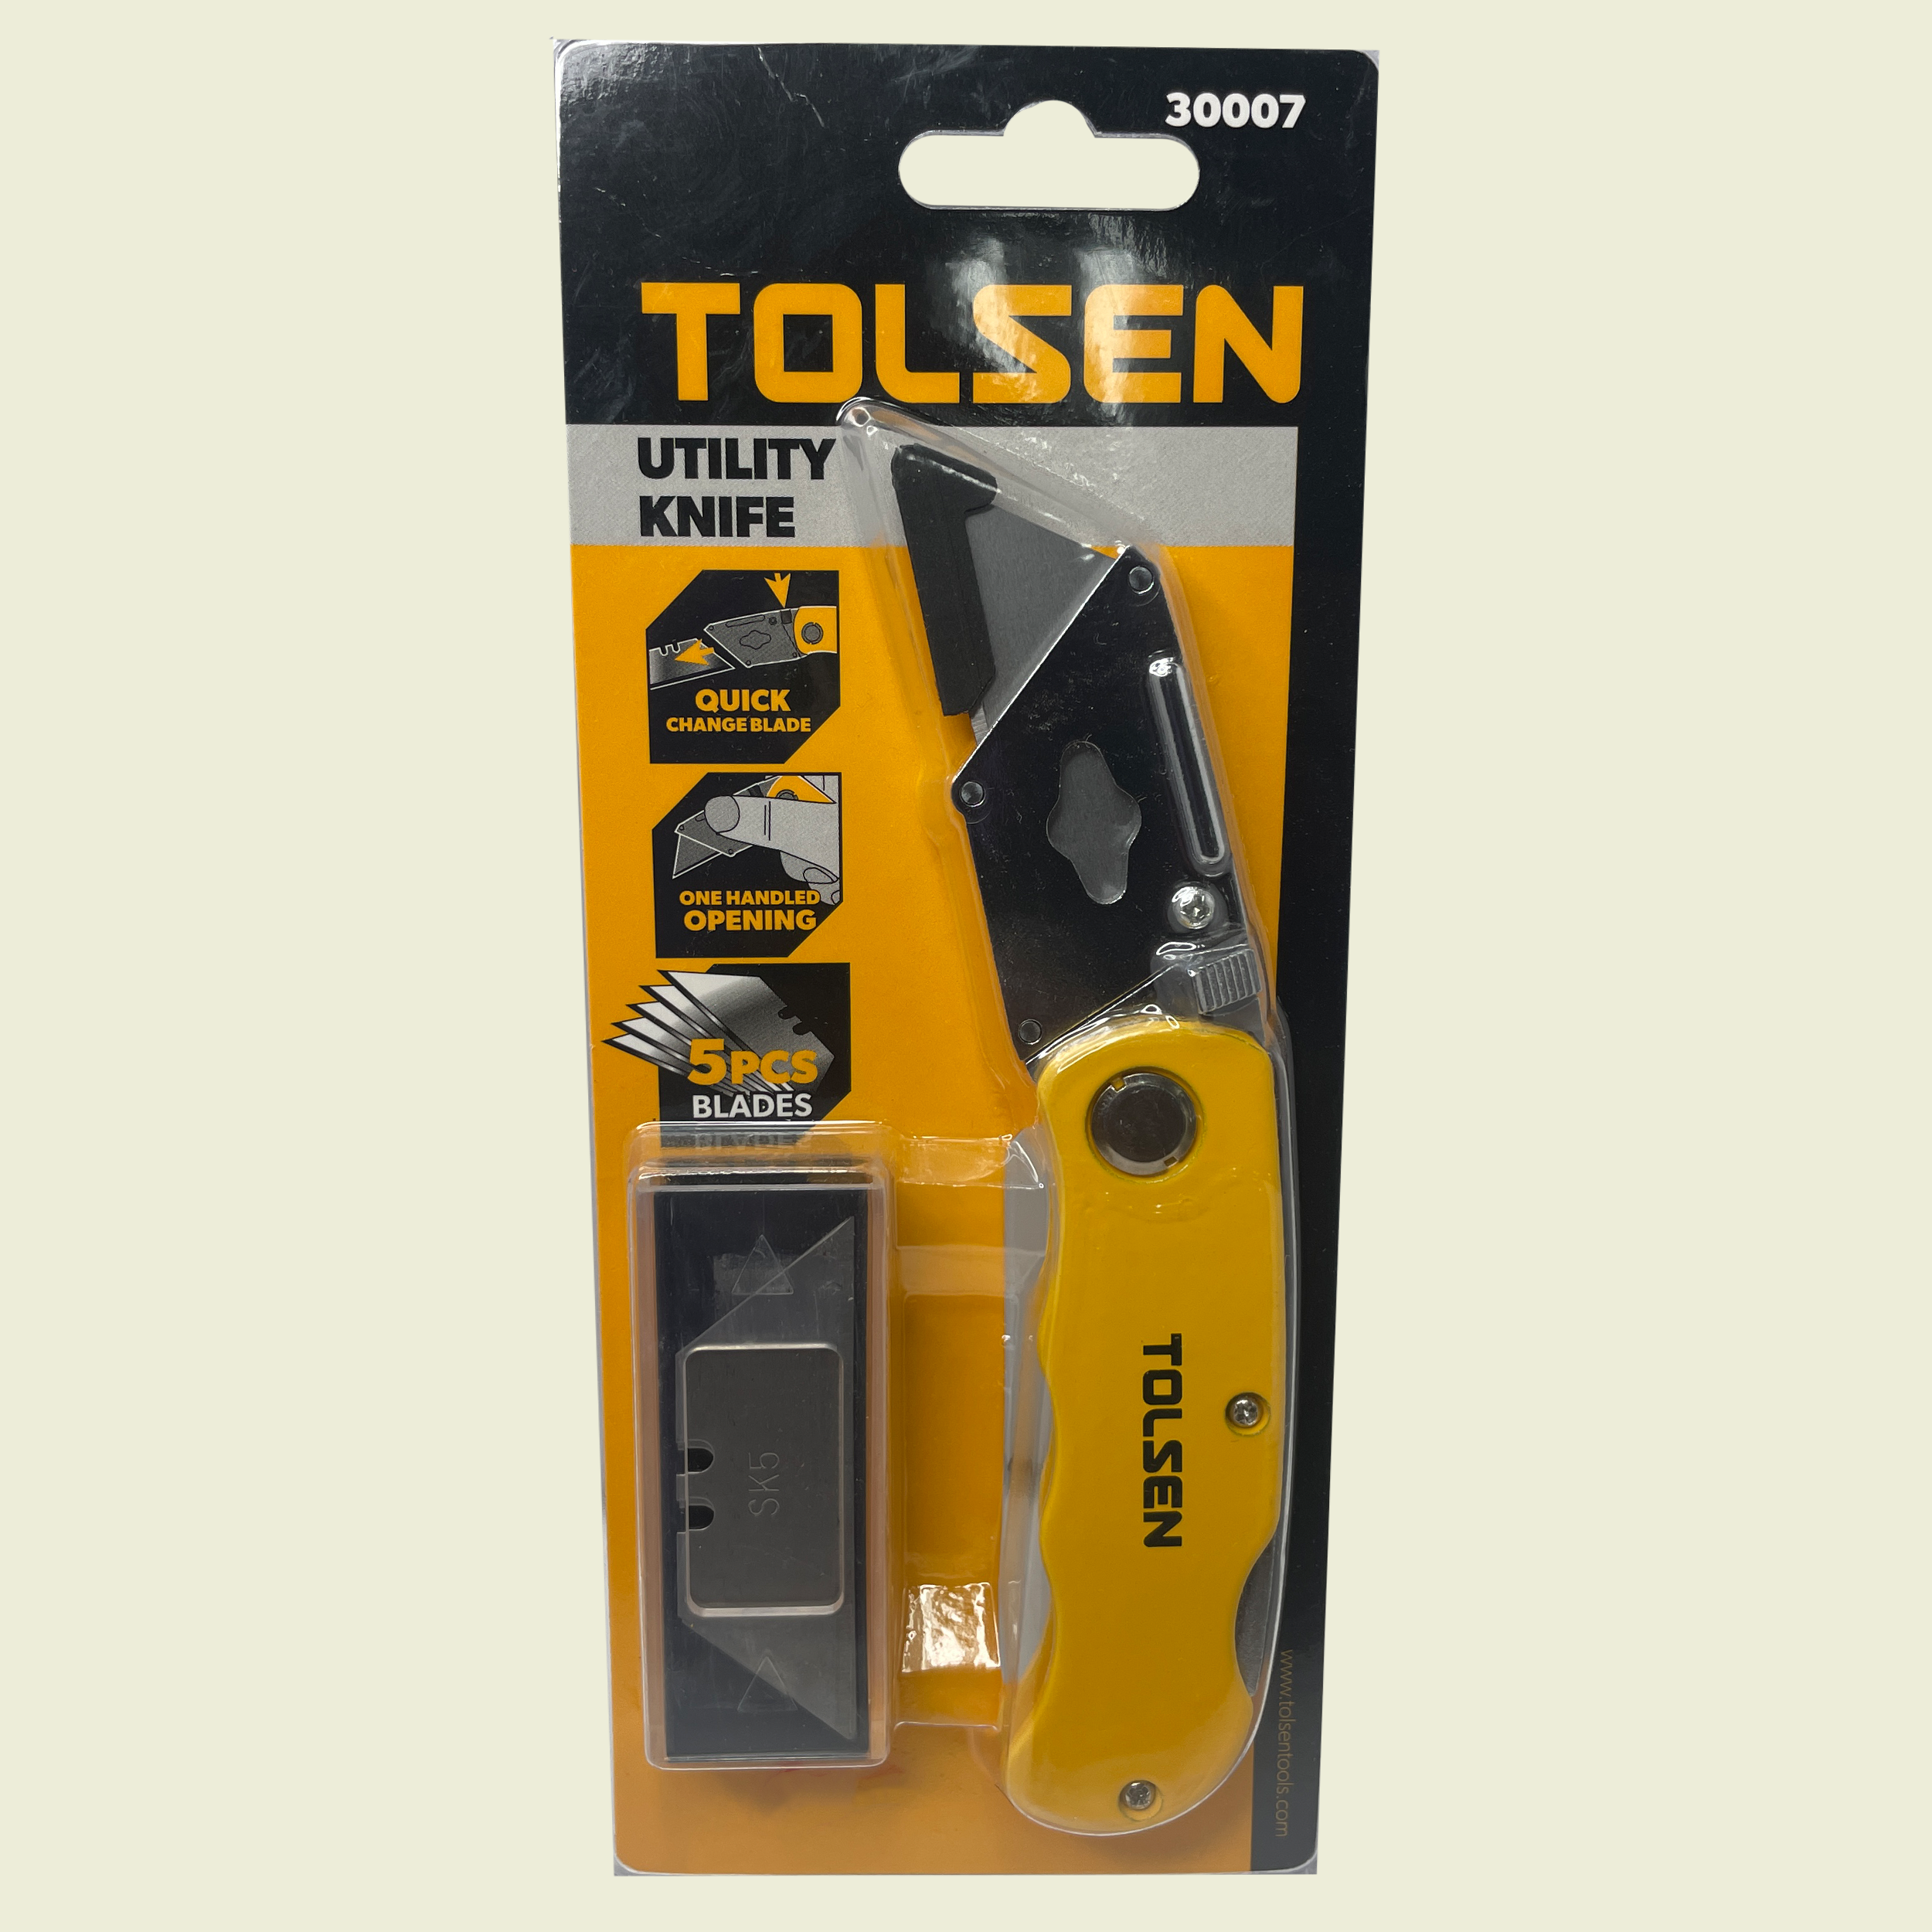 Tolsen Utility Knife • Samaroo's Materials & General LTD